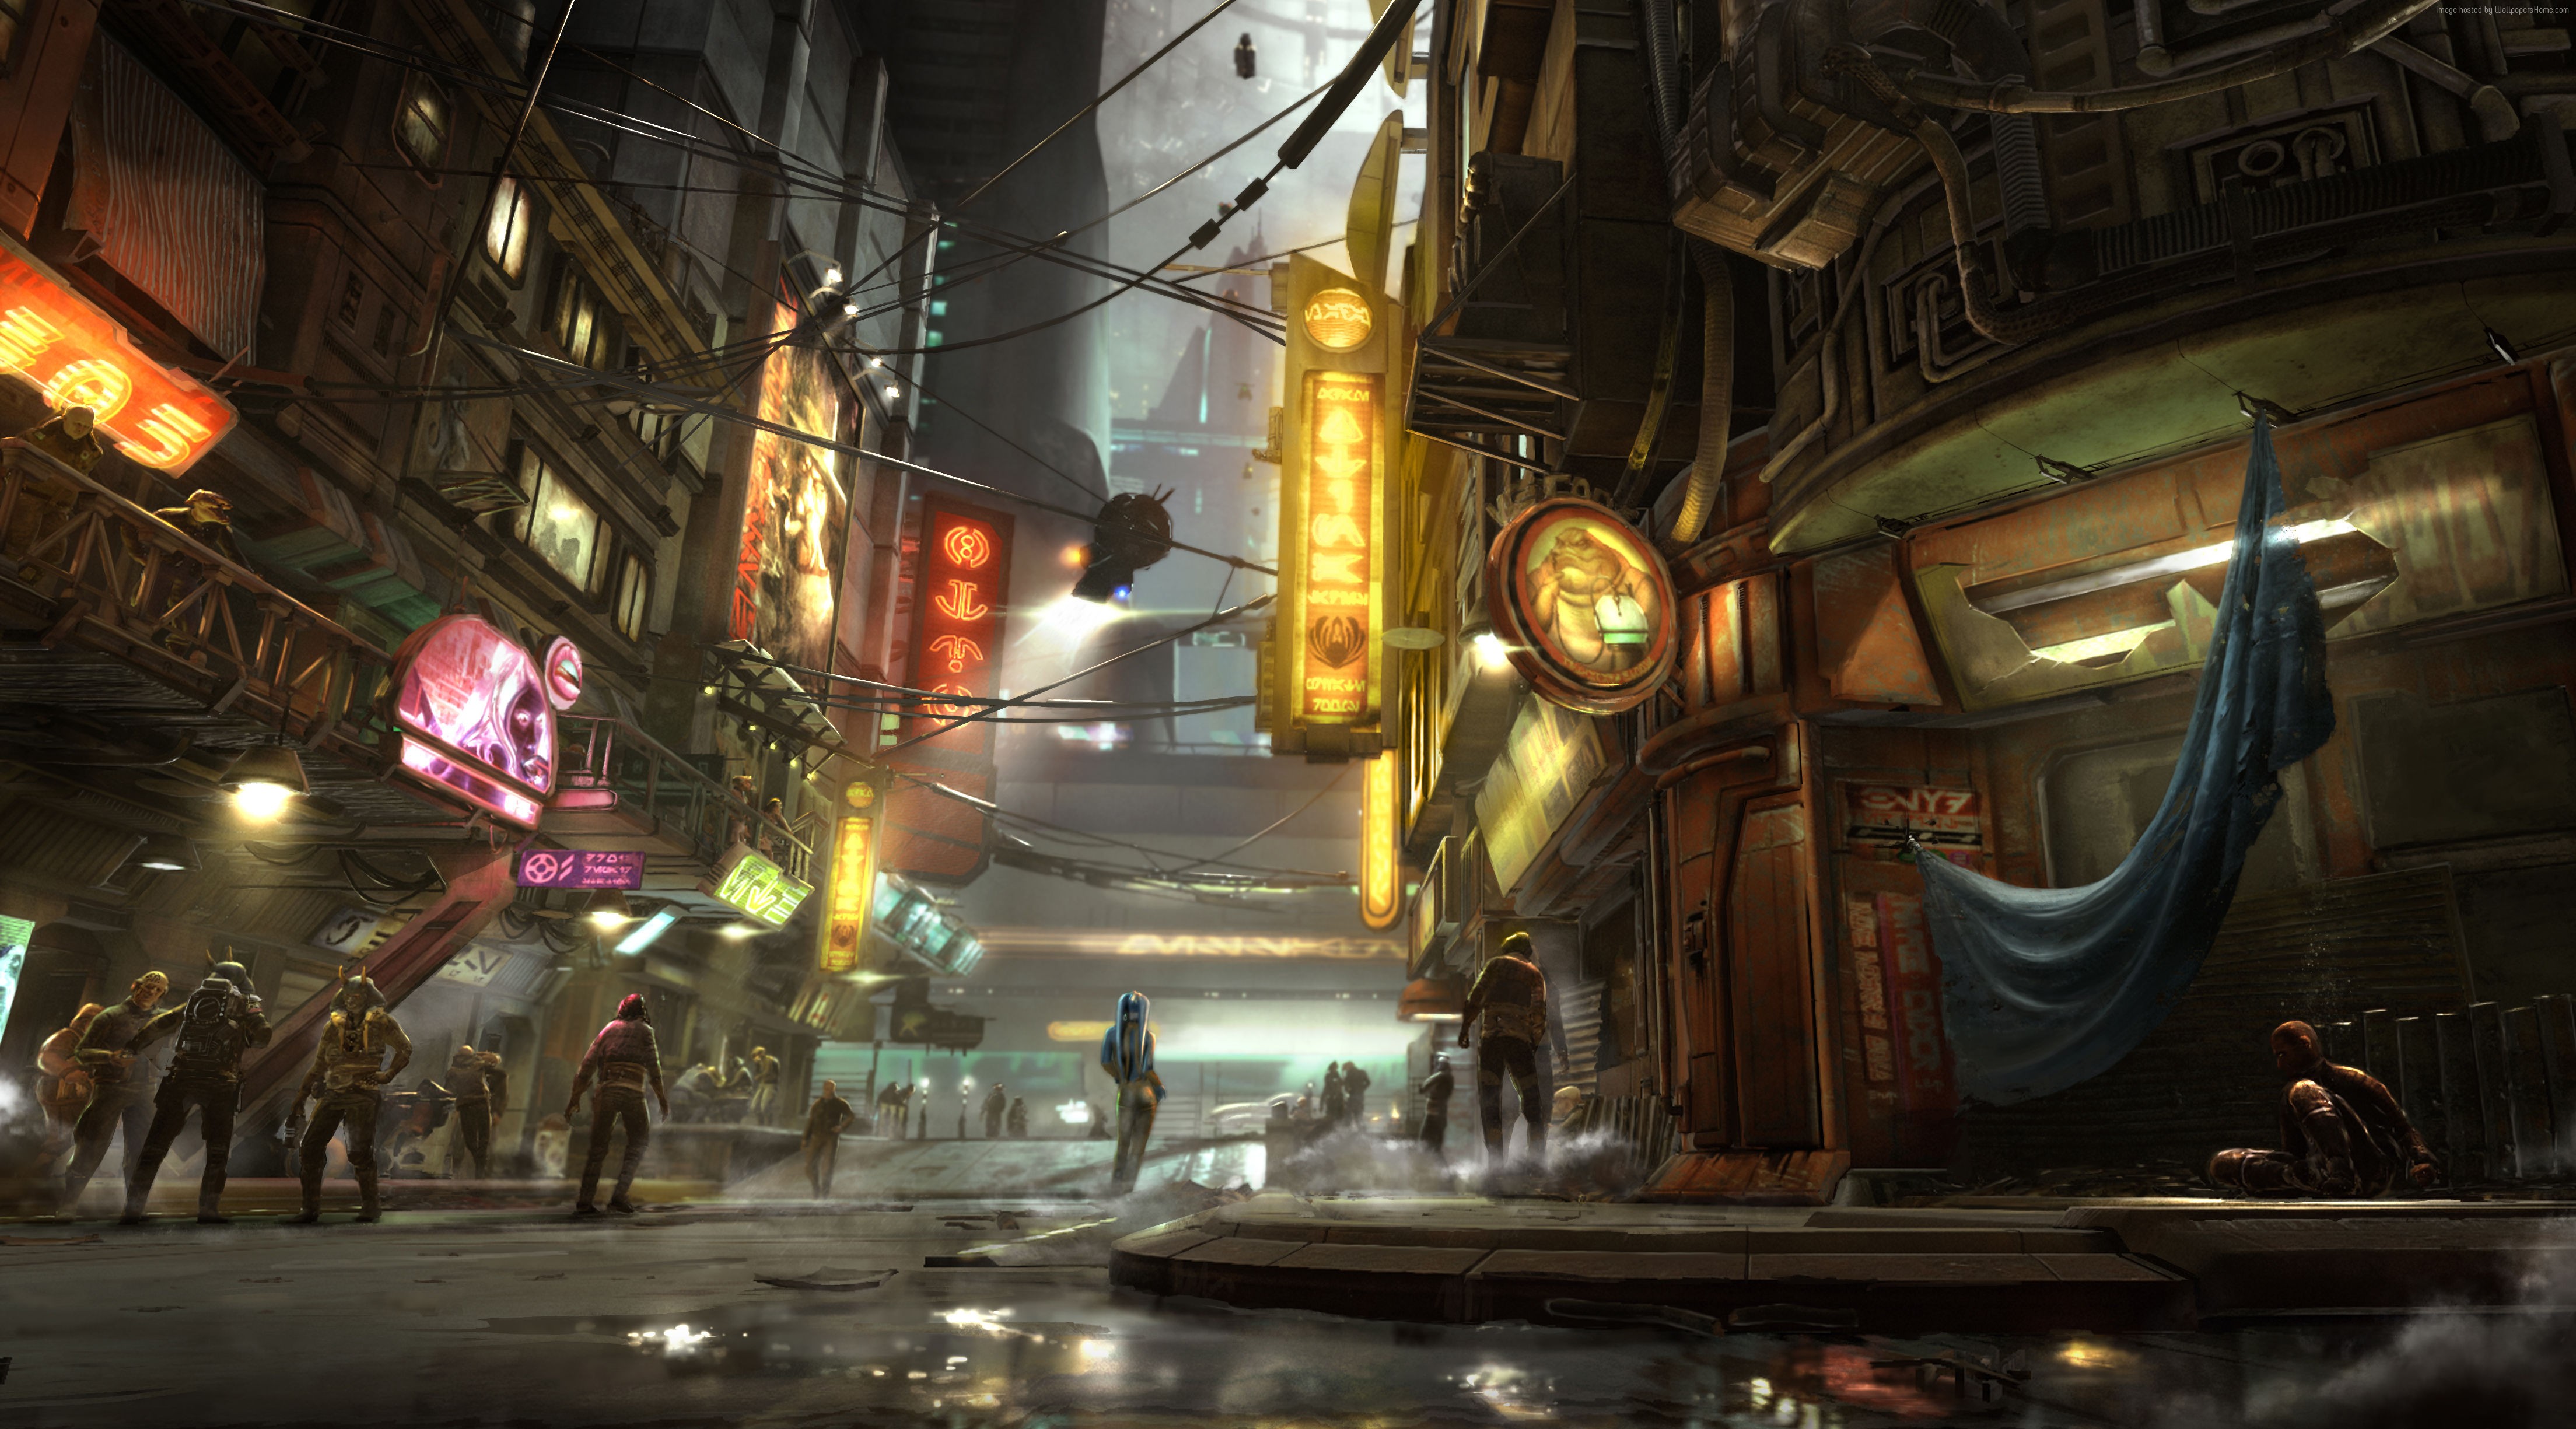 http://wallpapershome.com/images/wallpapers/star-wars-2013-4416x2450-star-wars-cyberpunk-game-art-city-sci-fi-406.jpg